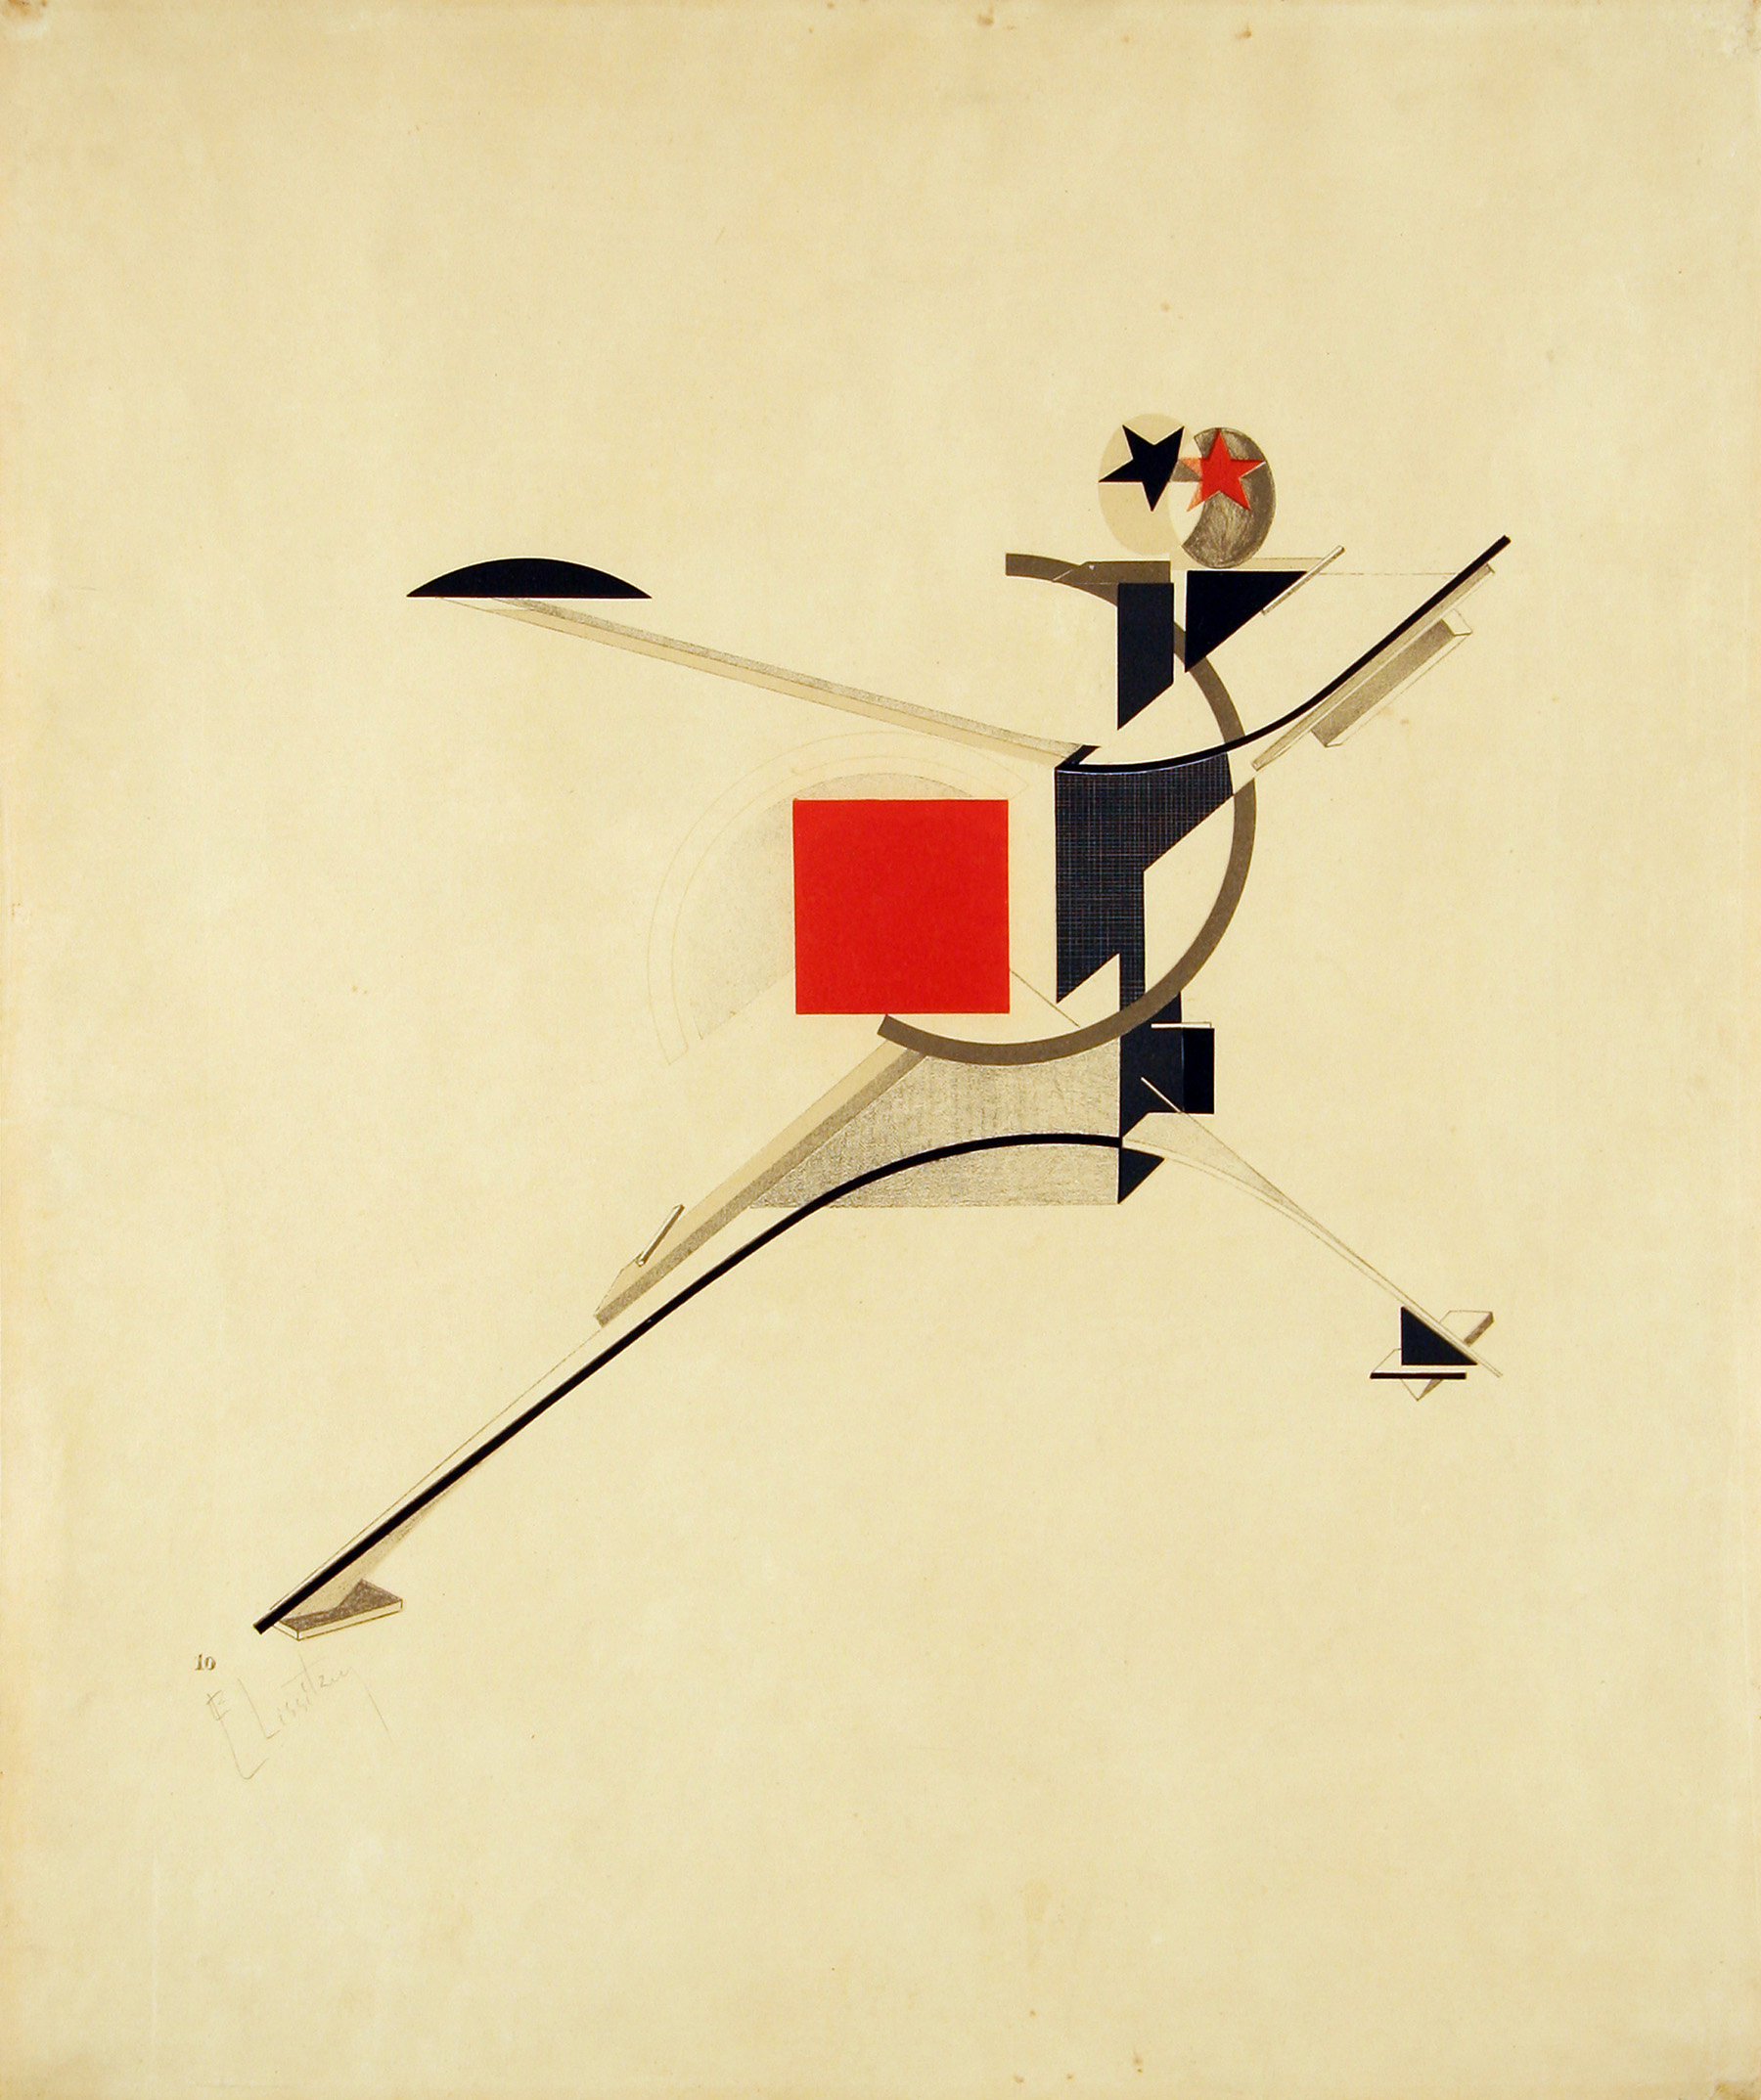 New Man by El Lissitzky - 1923 - 30.8 x 32.1 cm Museum of Modern Art